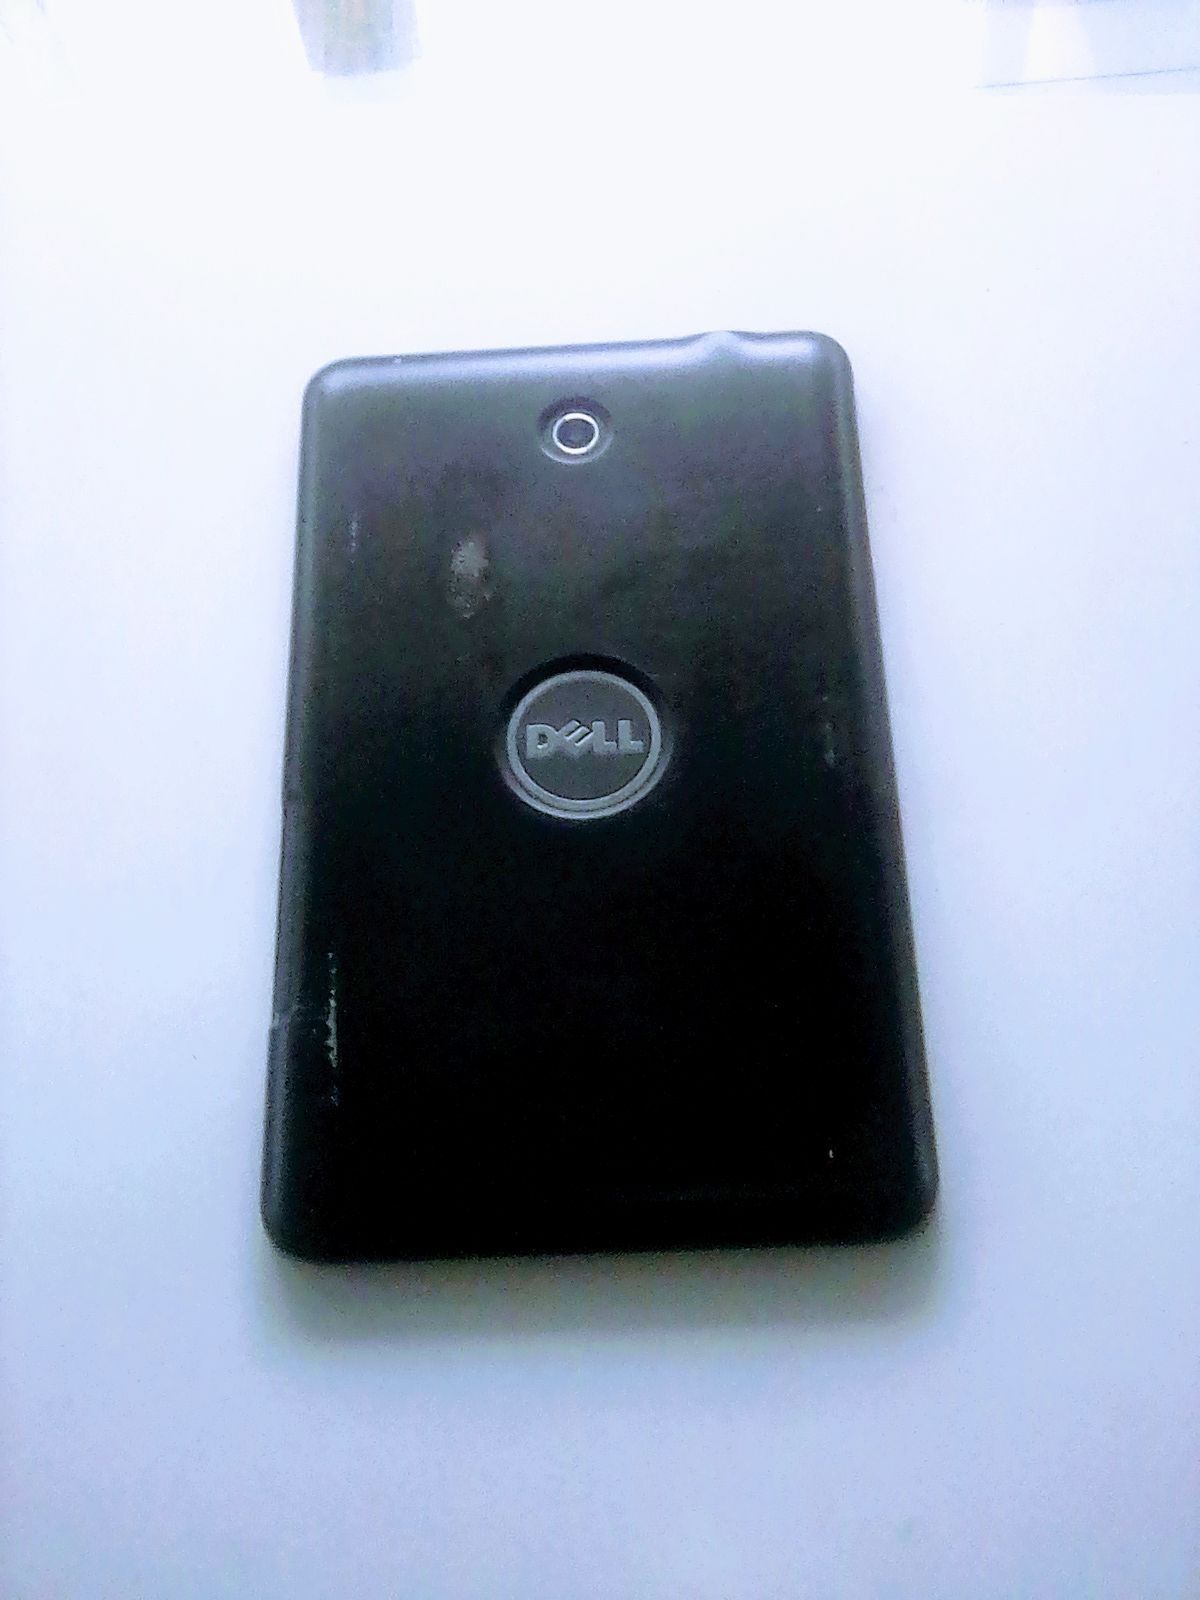 Tablet Dell - doskonały prezent!